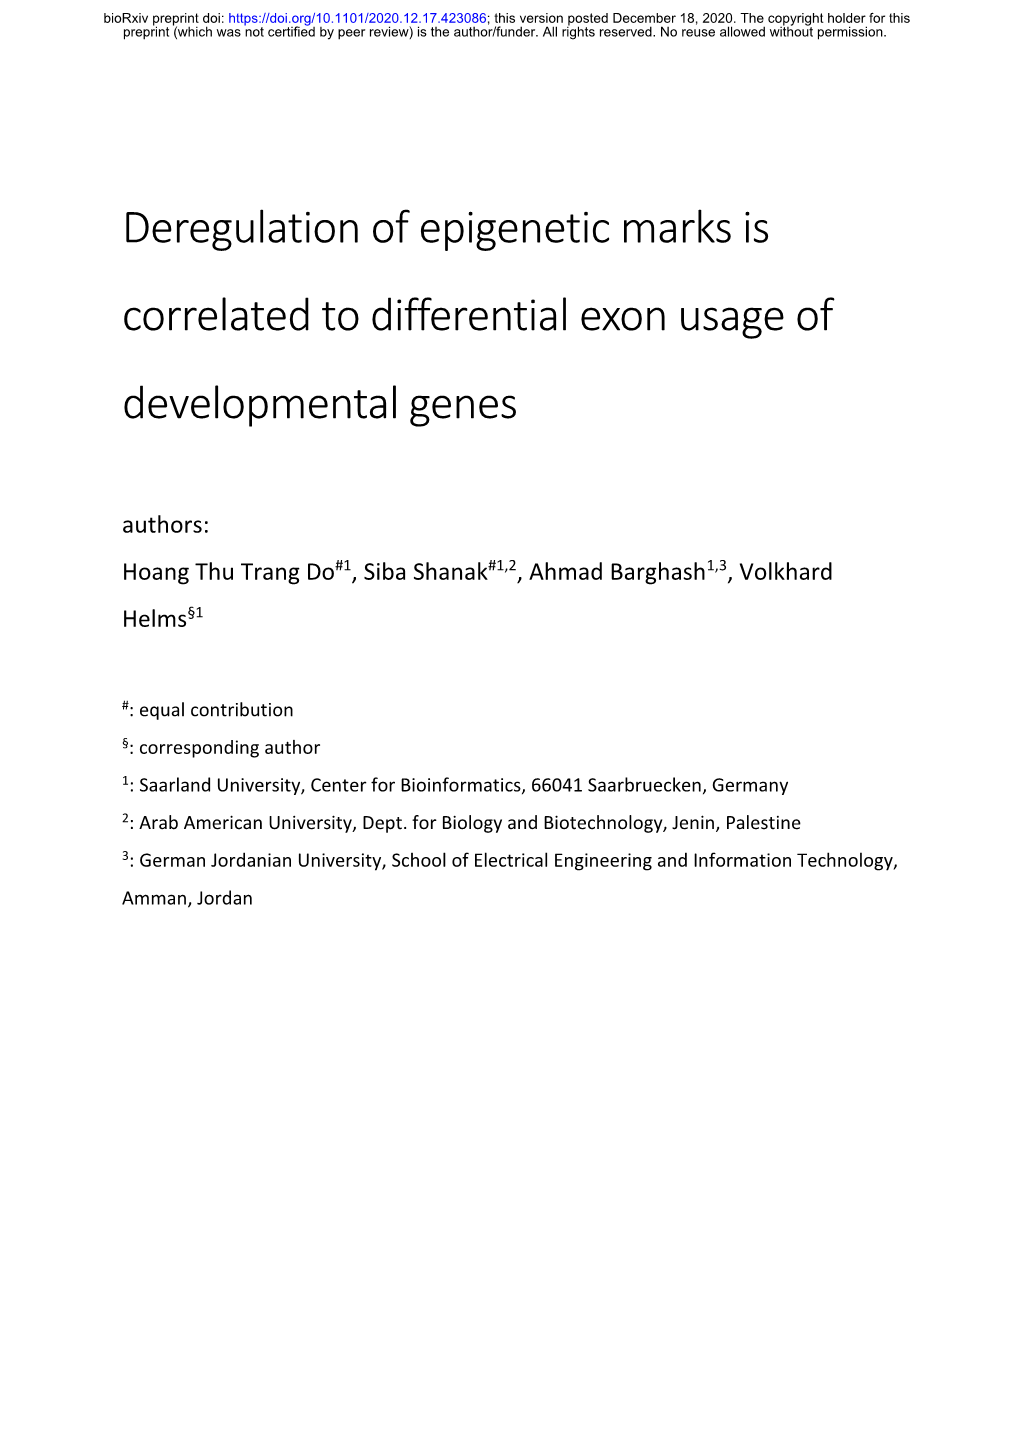 Deregulation of Epigenetic Marks Is Correlated to Differential Exon Usage of Developmental Genes